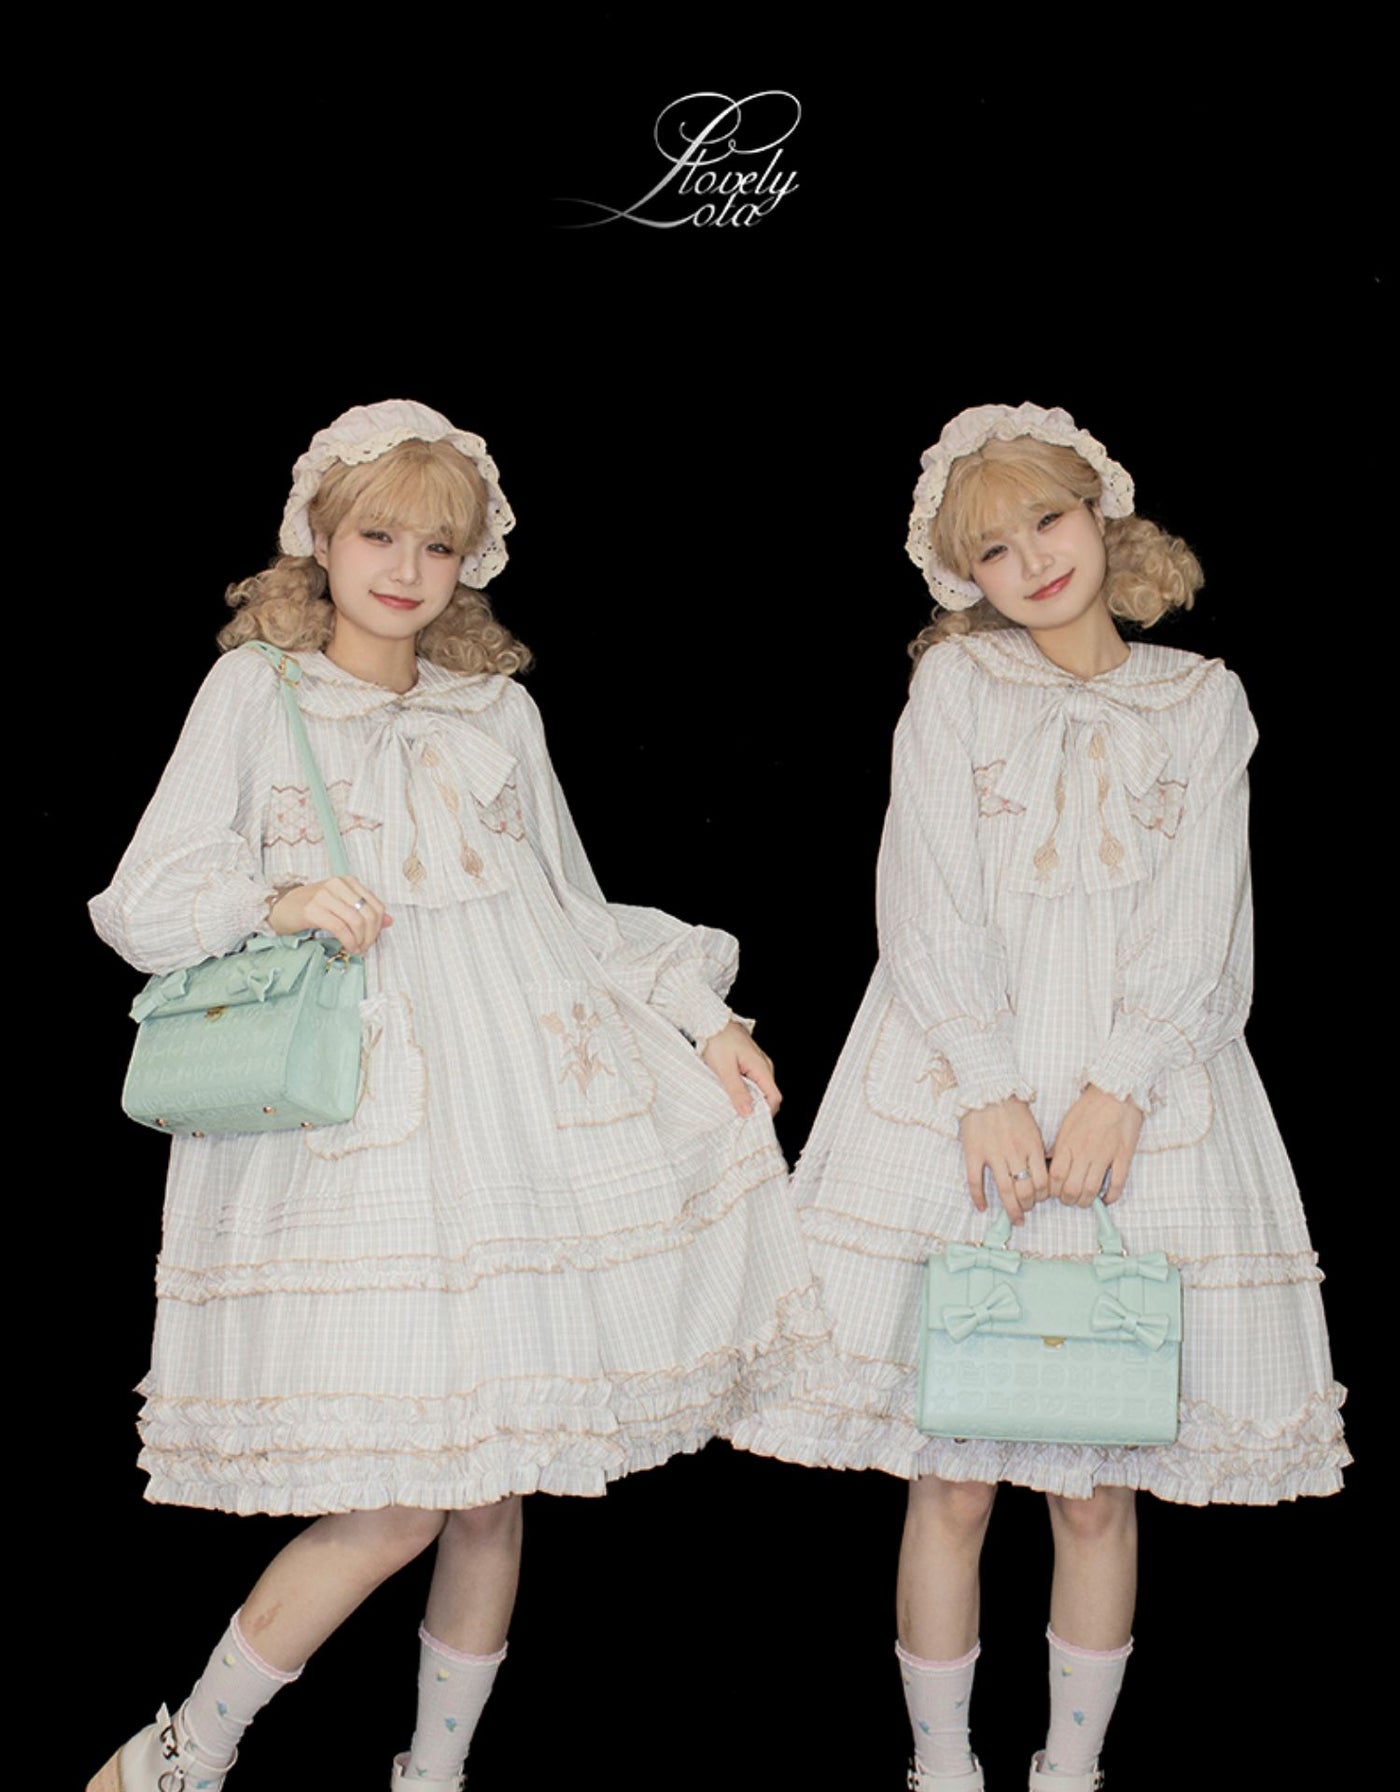 (Buyforme) Lovelylota~ Sweet Heart Embossed Chocolate Lolita Bag   